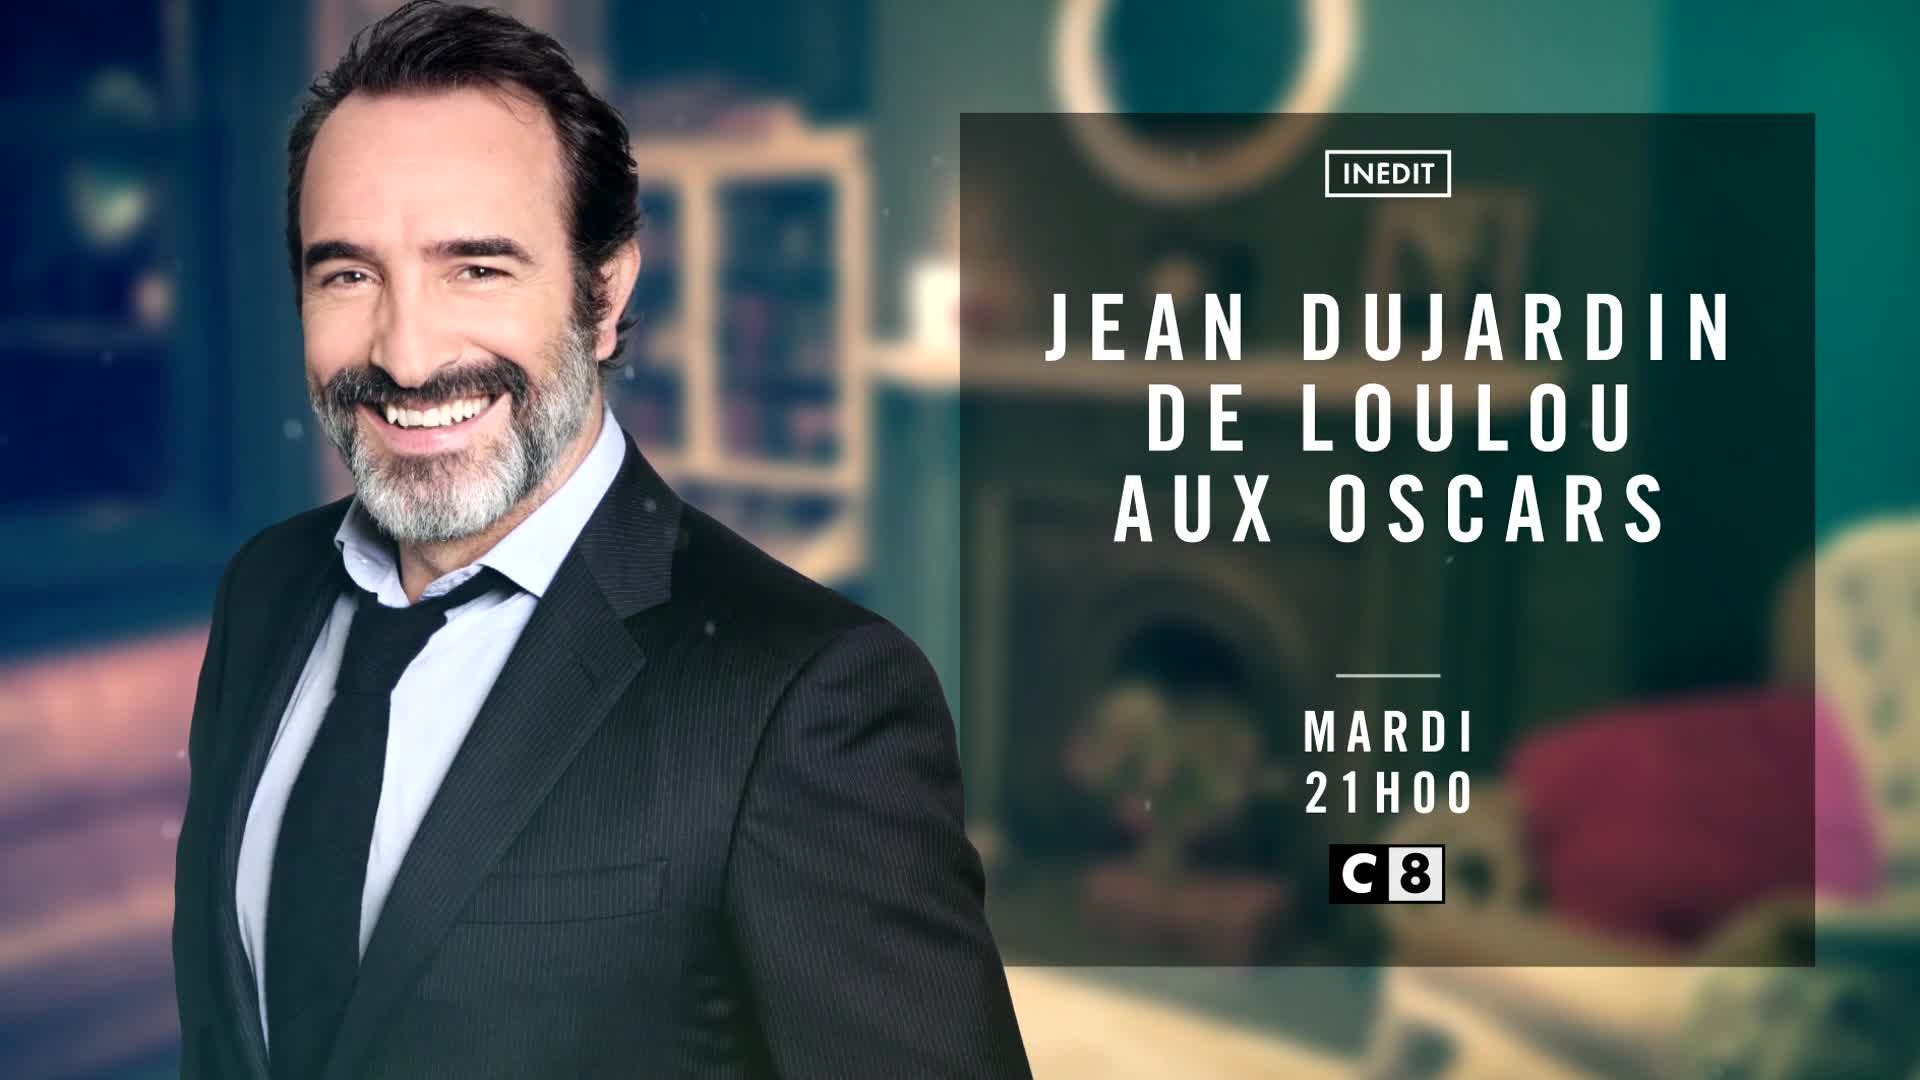 Jean Dujardin, de Loulou aux oscars - 06/06/17 - Vidéo Dailymotion